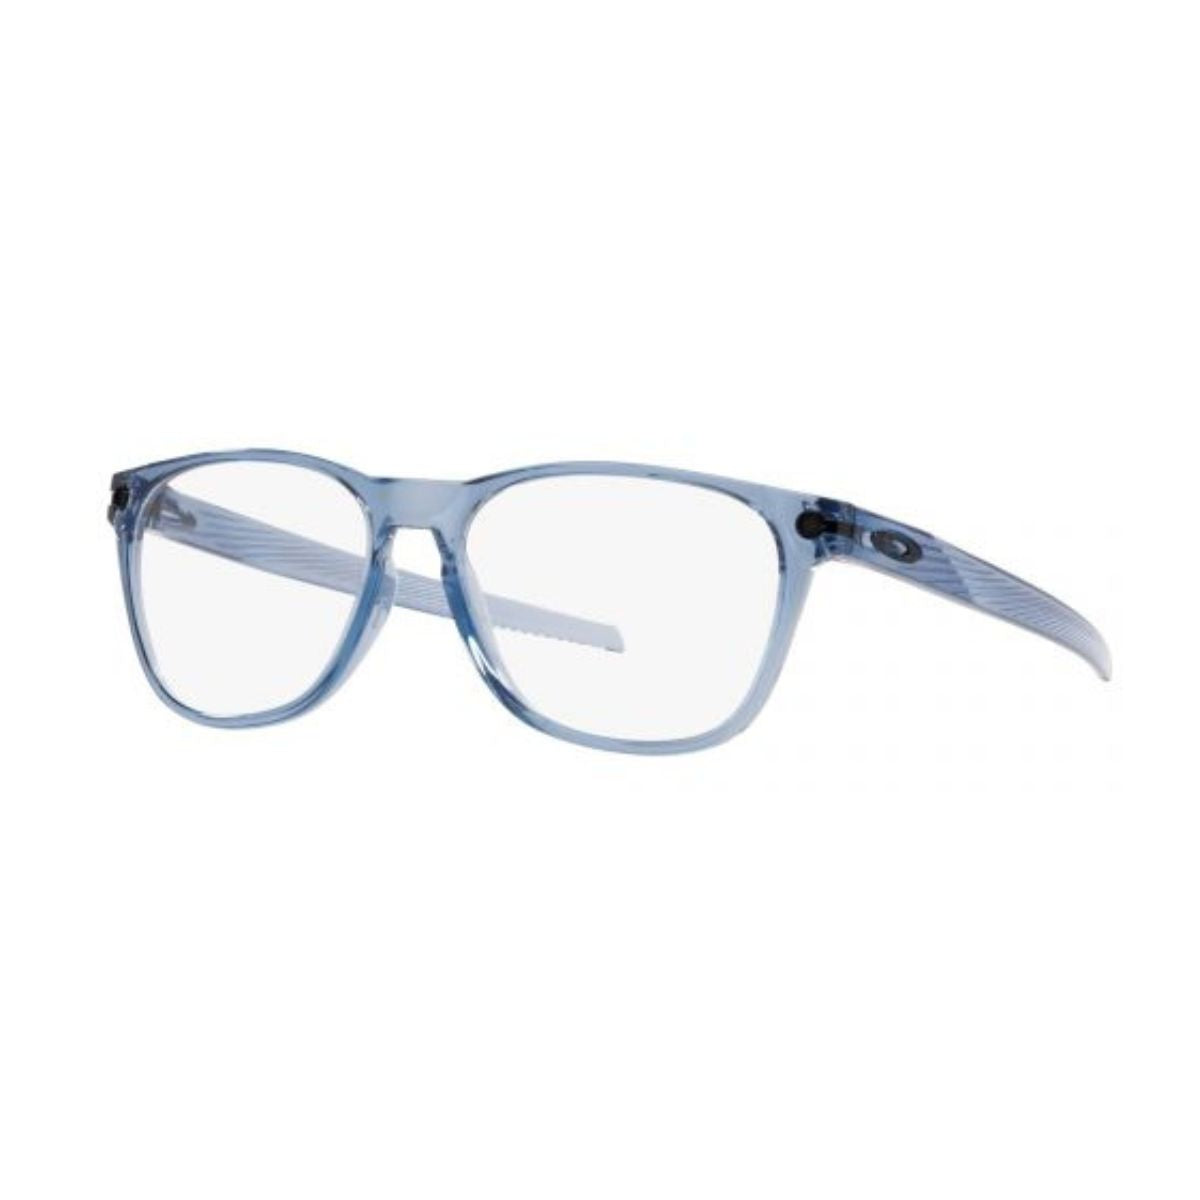 "stylish Oakley 8177 0654 prescription eyeglasses frame for men's at optorium"